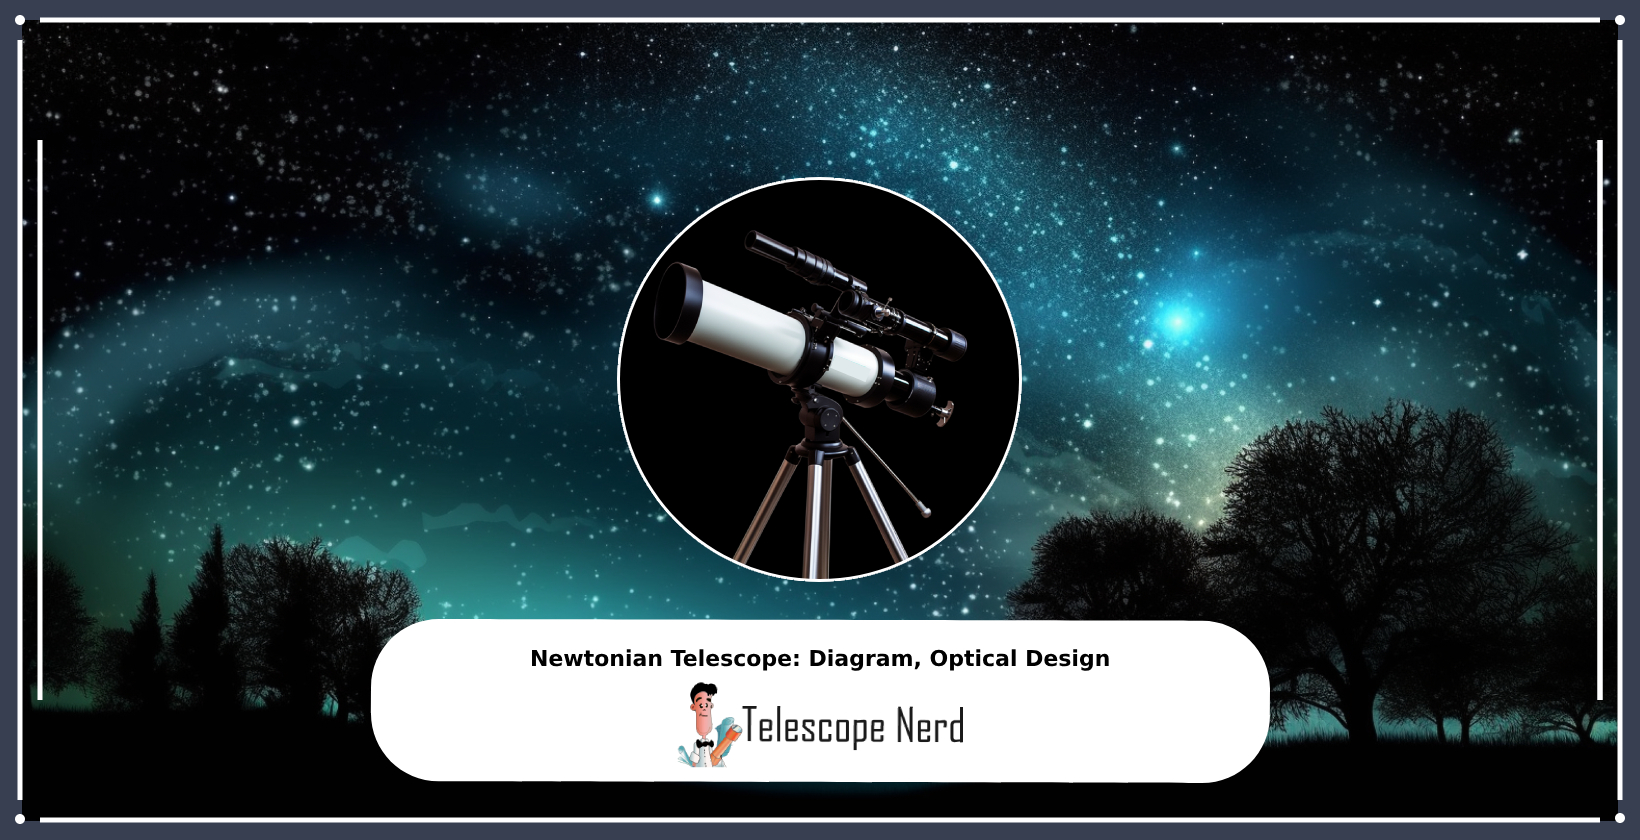 Newtonian Telescope: Diagram, Optical Design